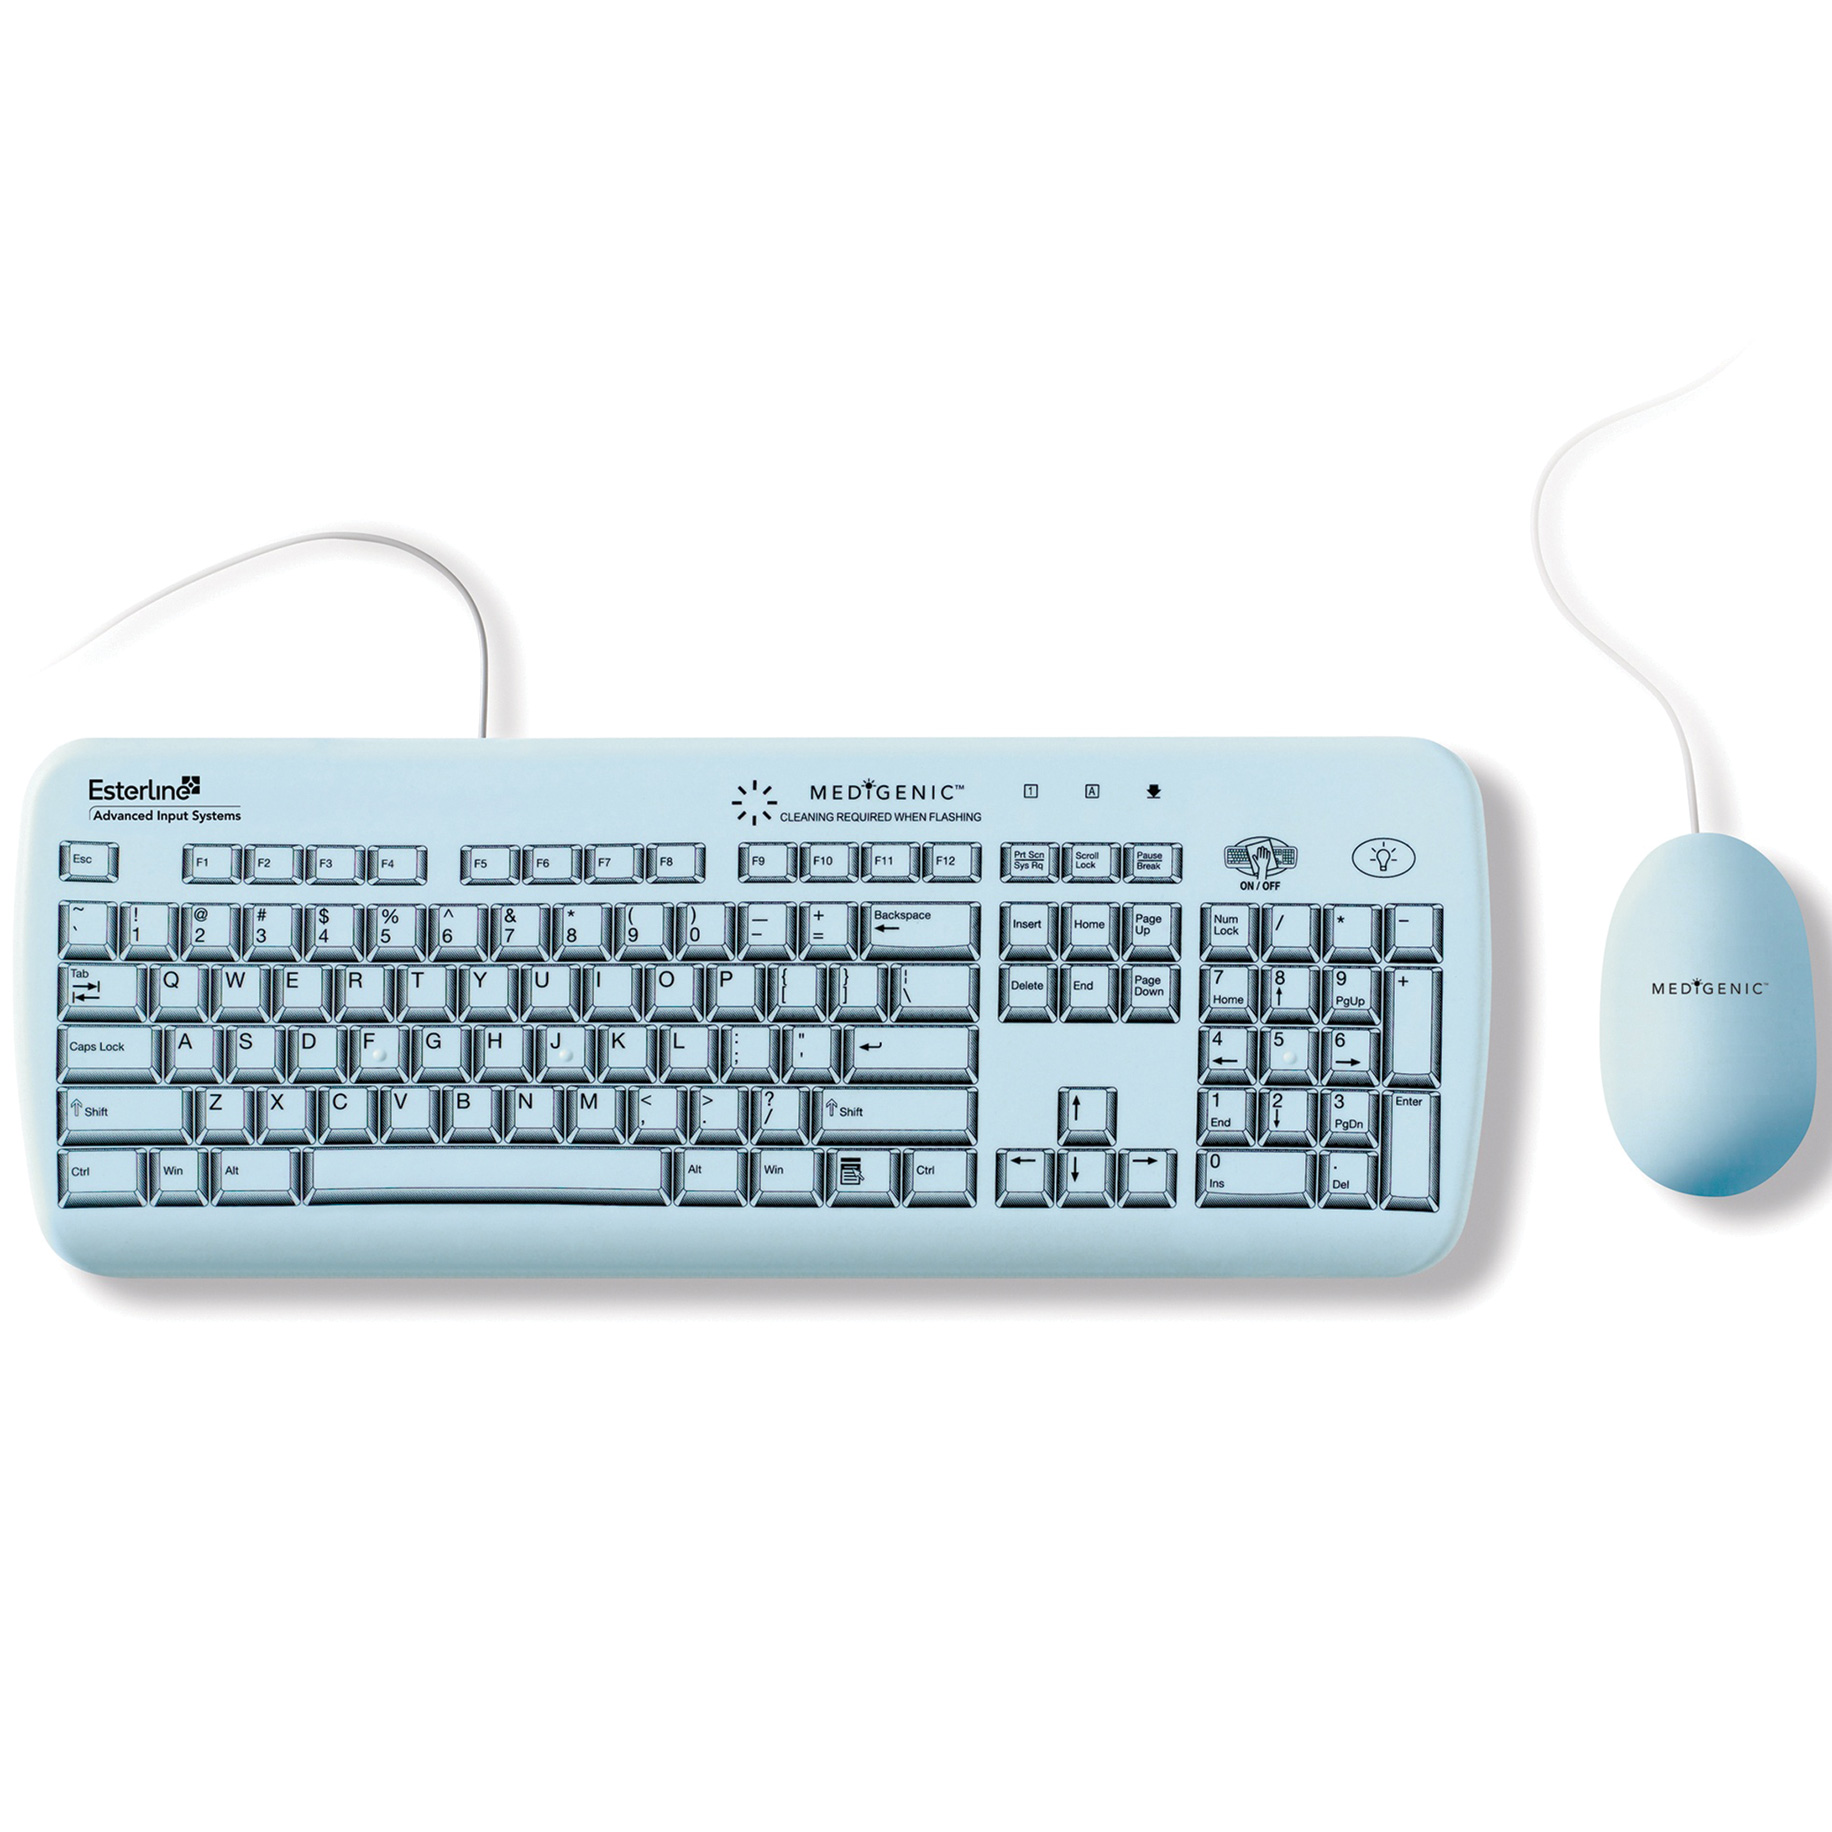 Medigenic 105 Keyboard & Mouse Combo 